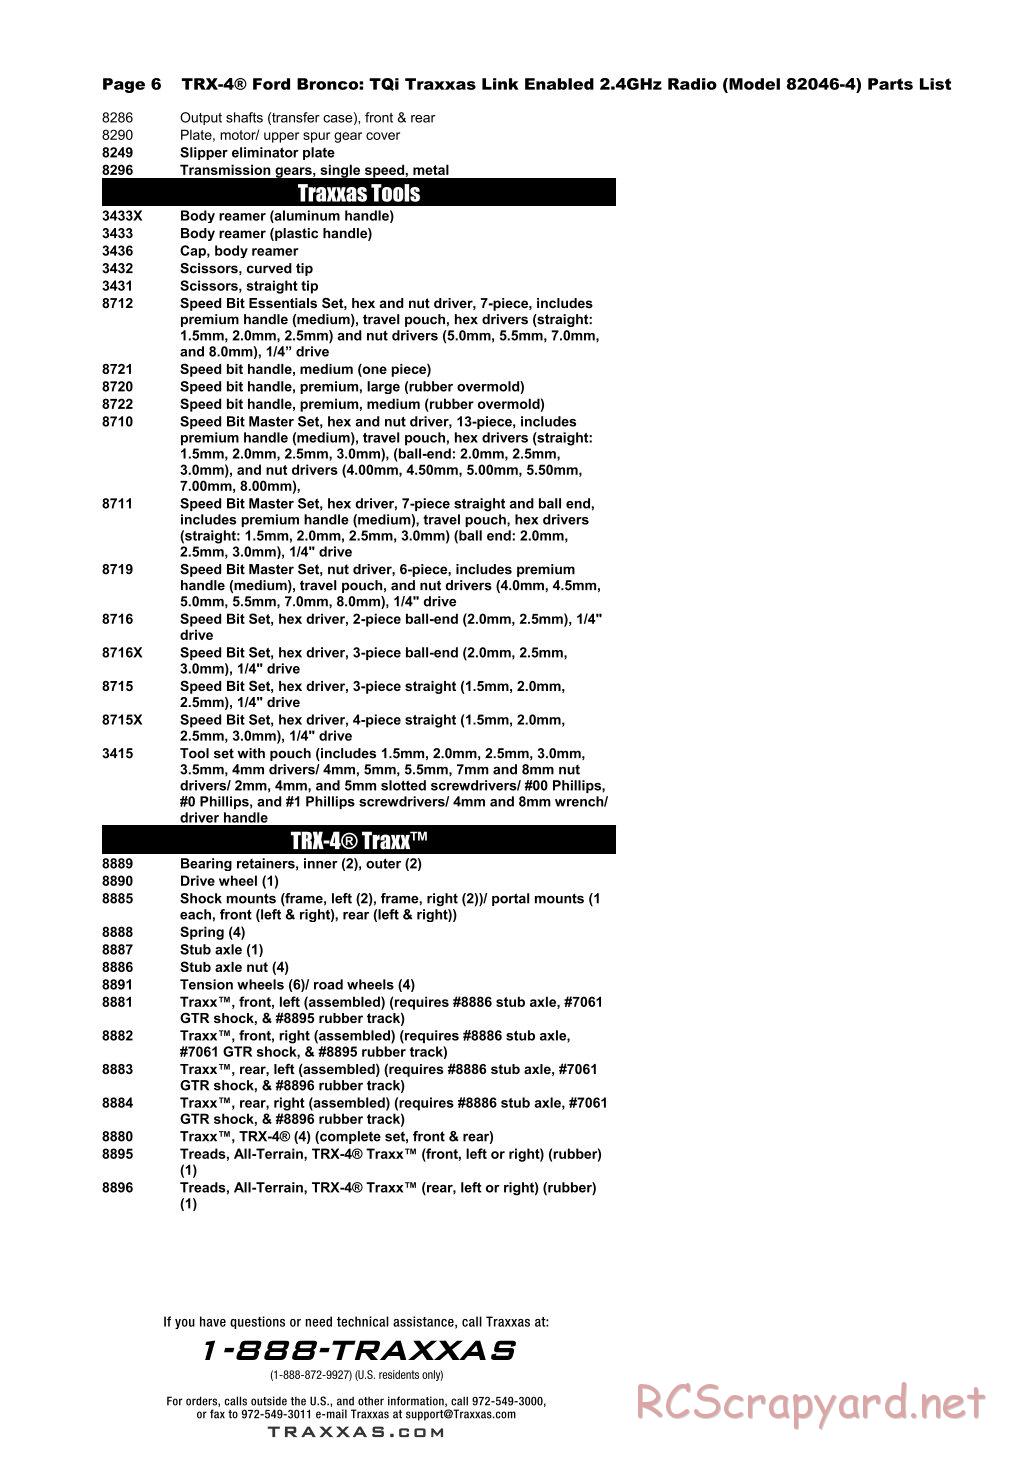 Traxxas - TRX-4 Ford Bronco - Parts List - Page 6